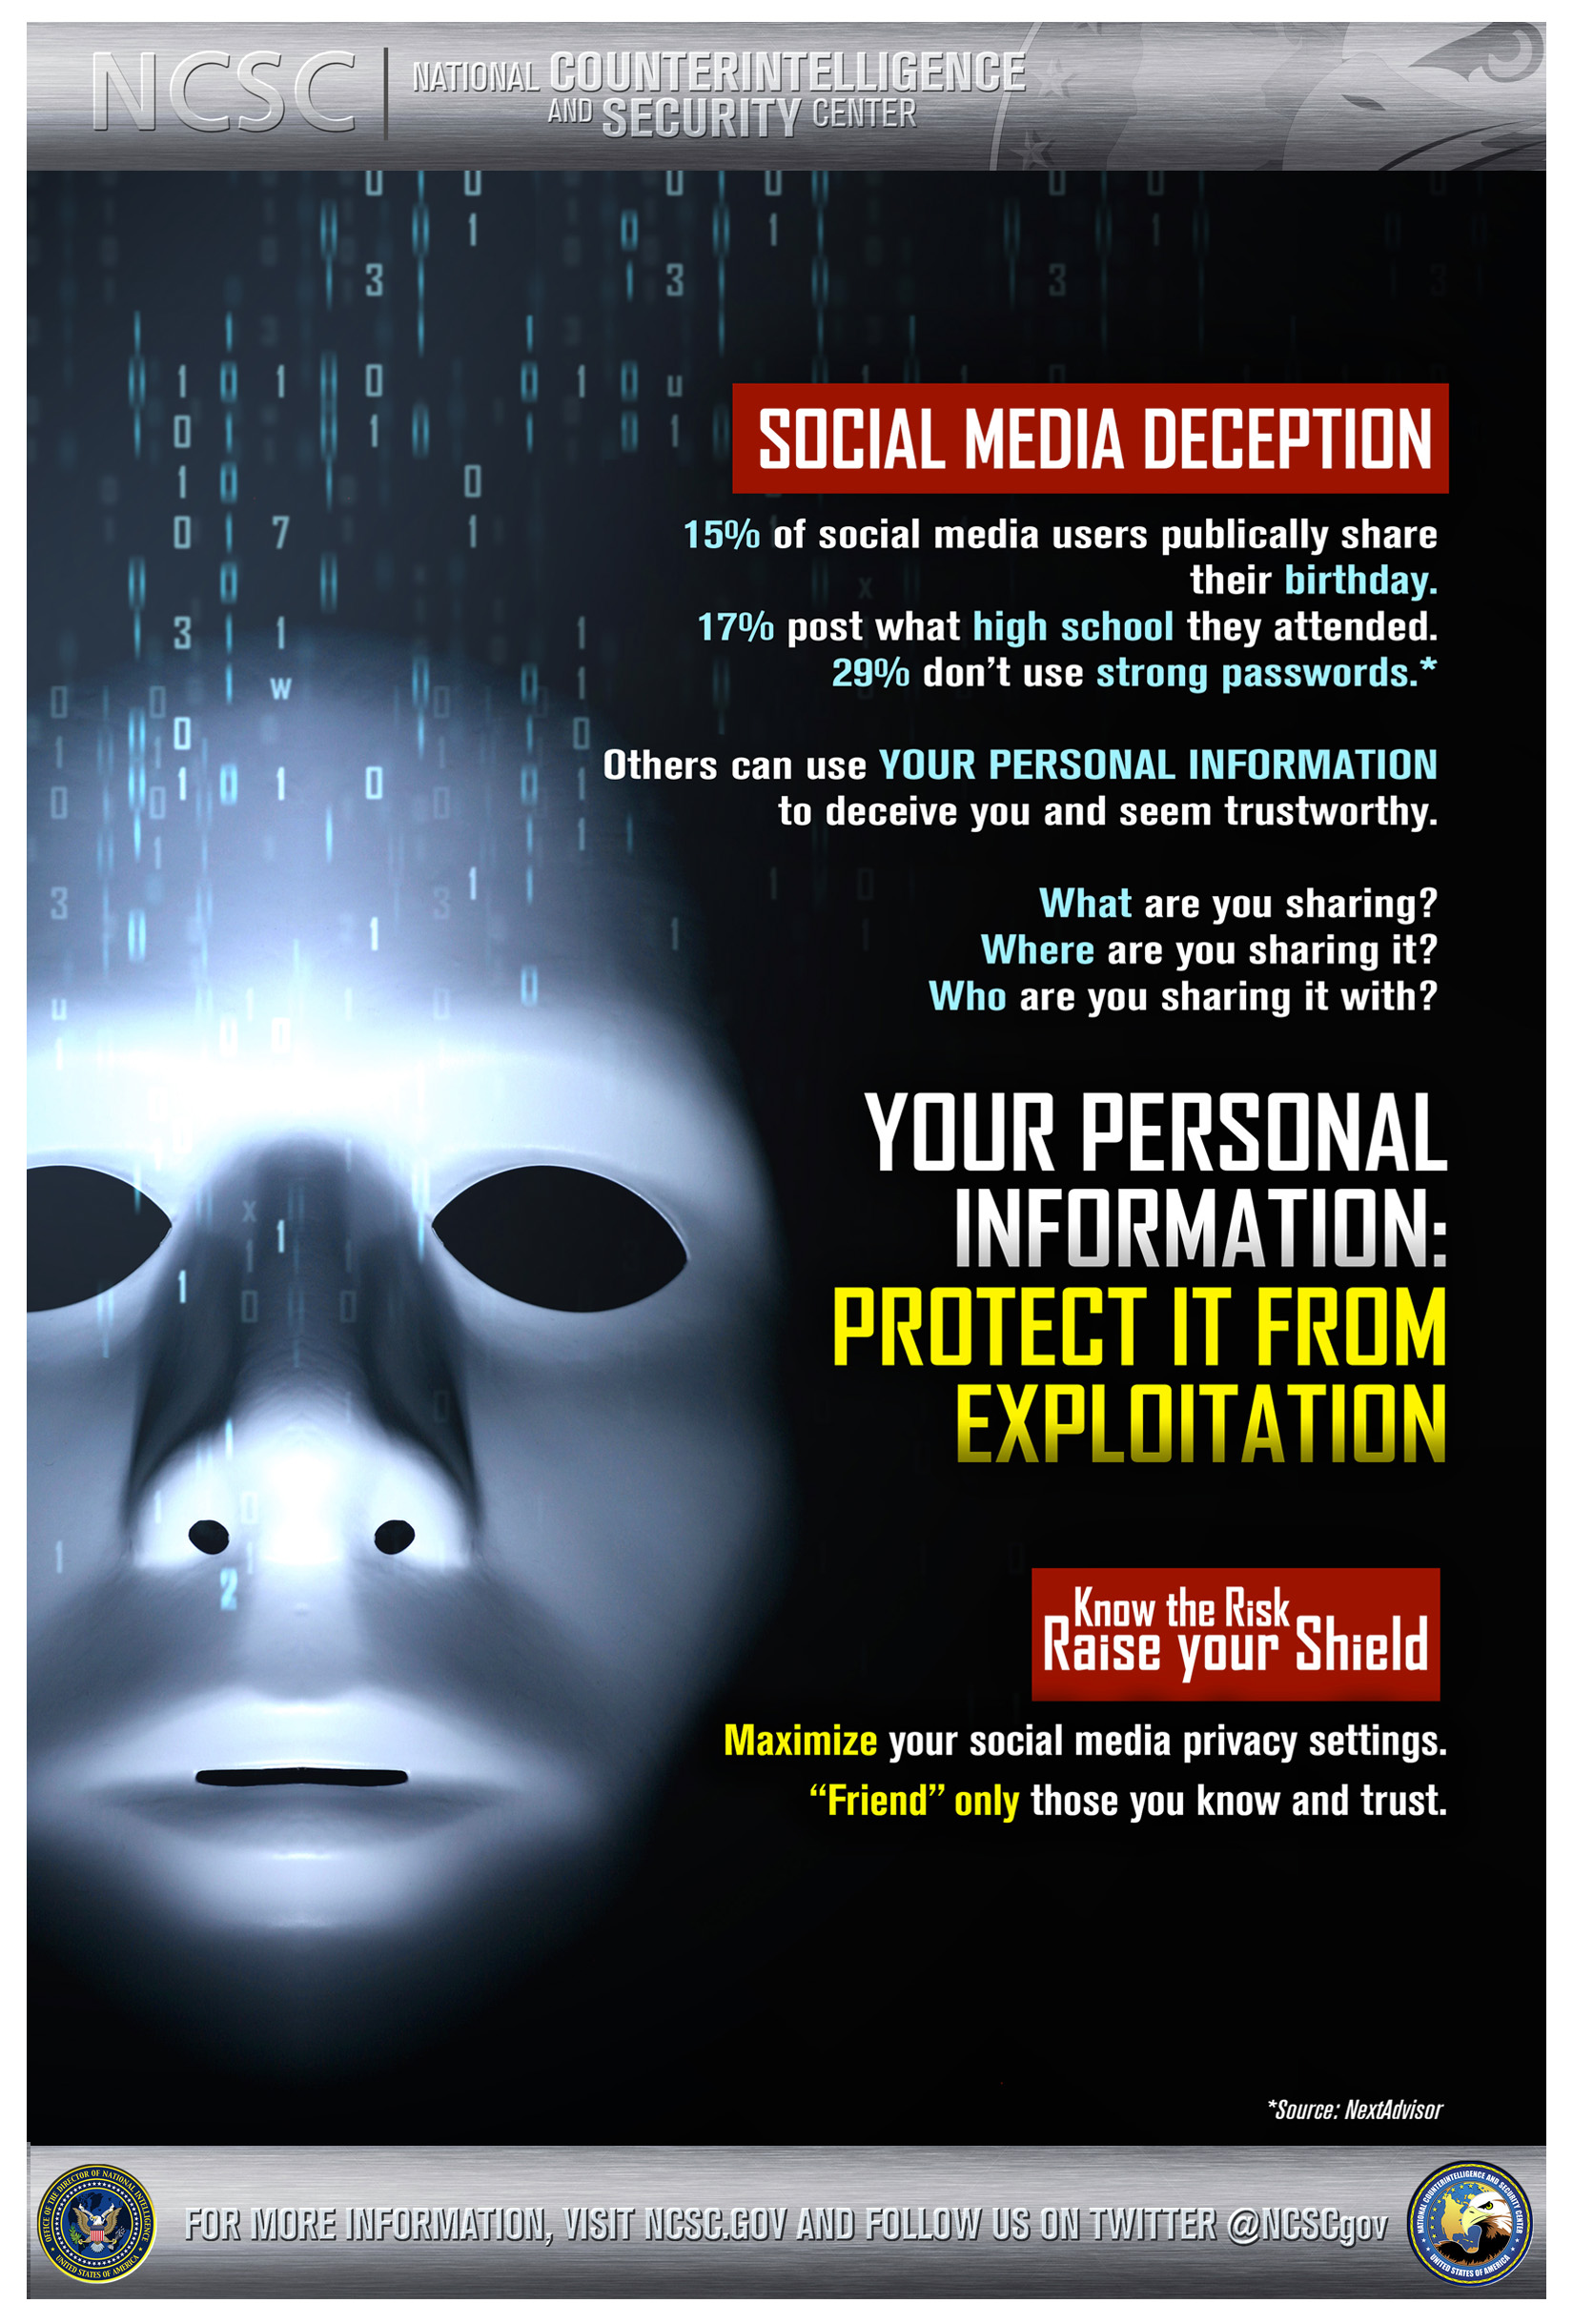 Recent cyber breaches trigger urgent awareness campaign